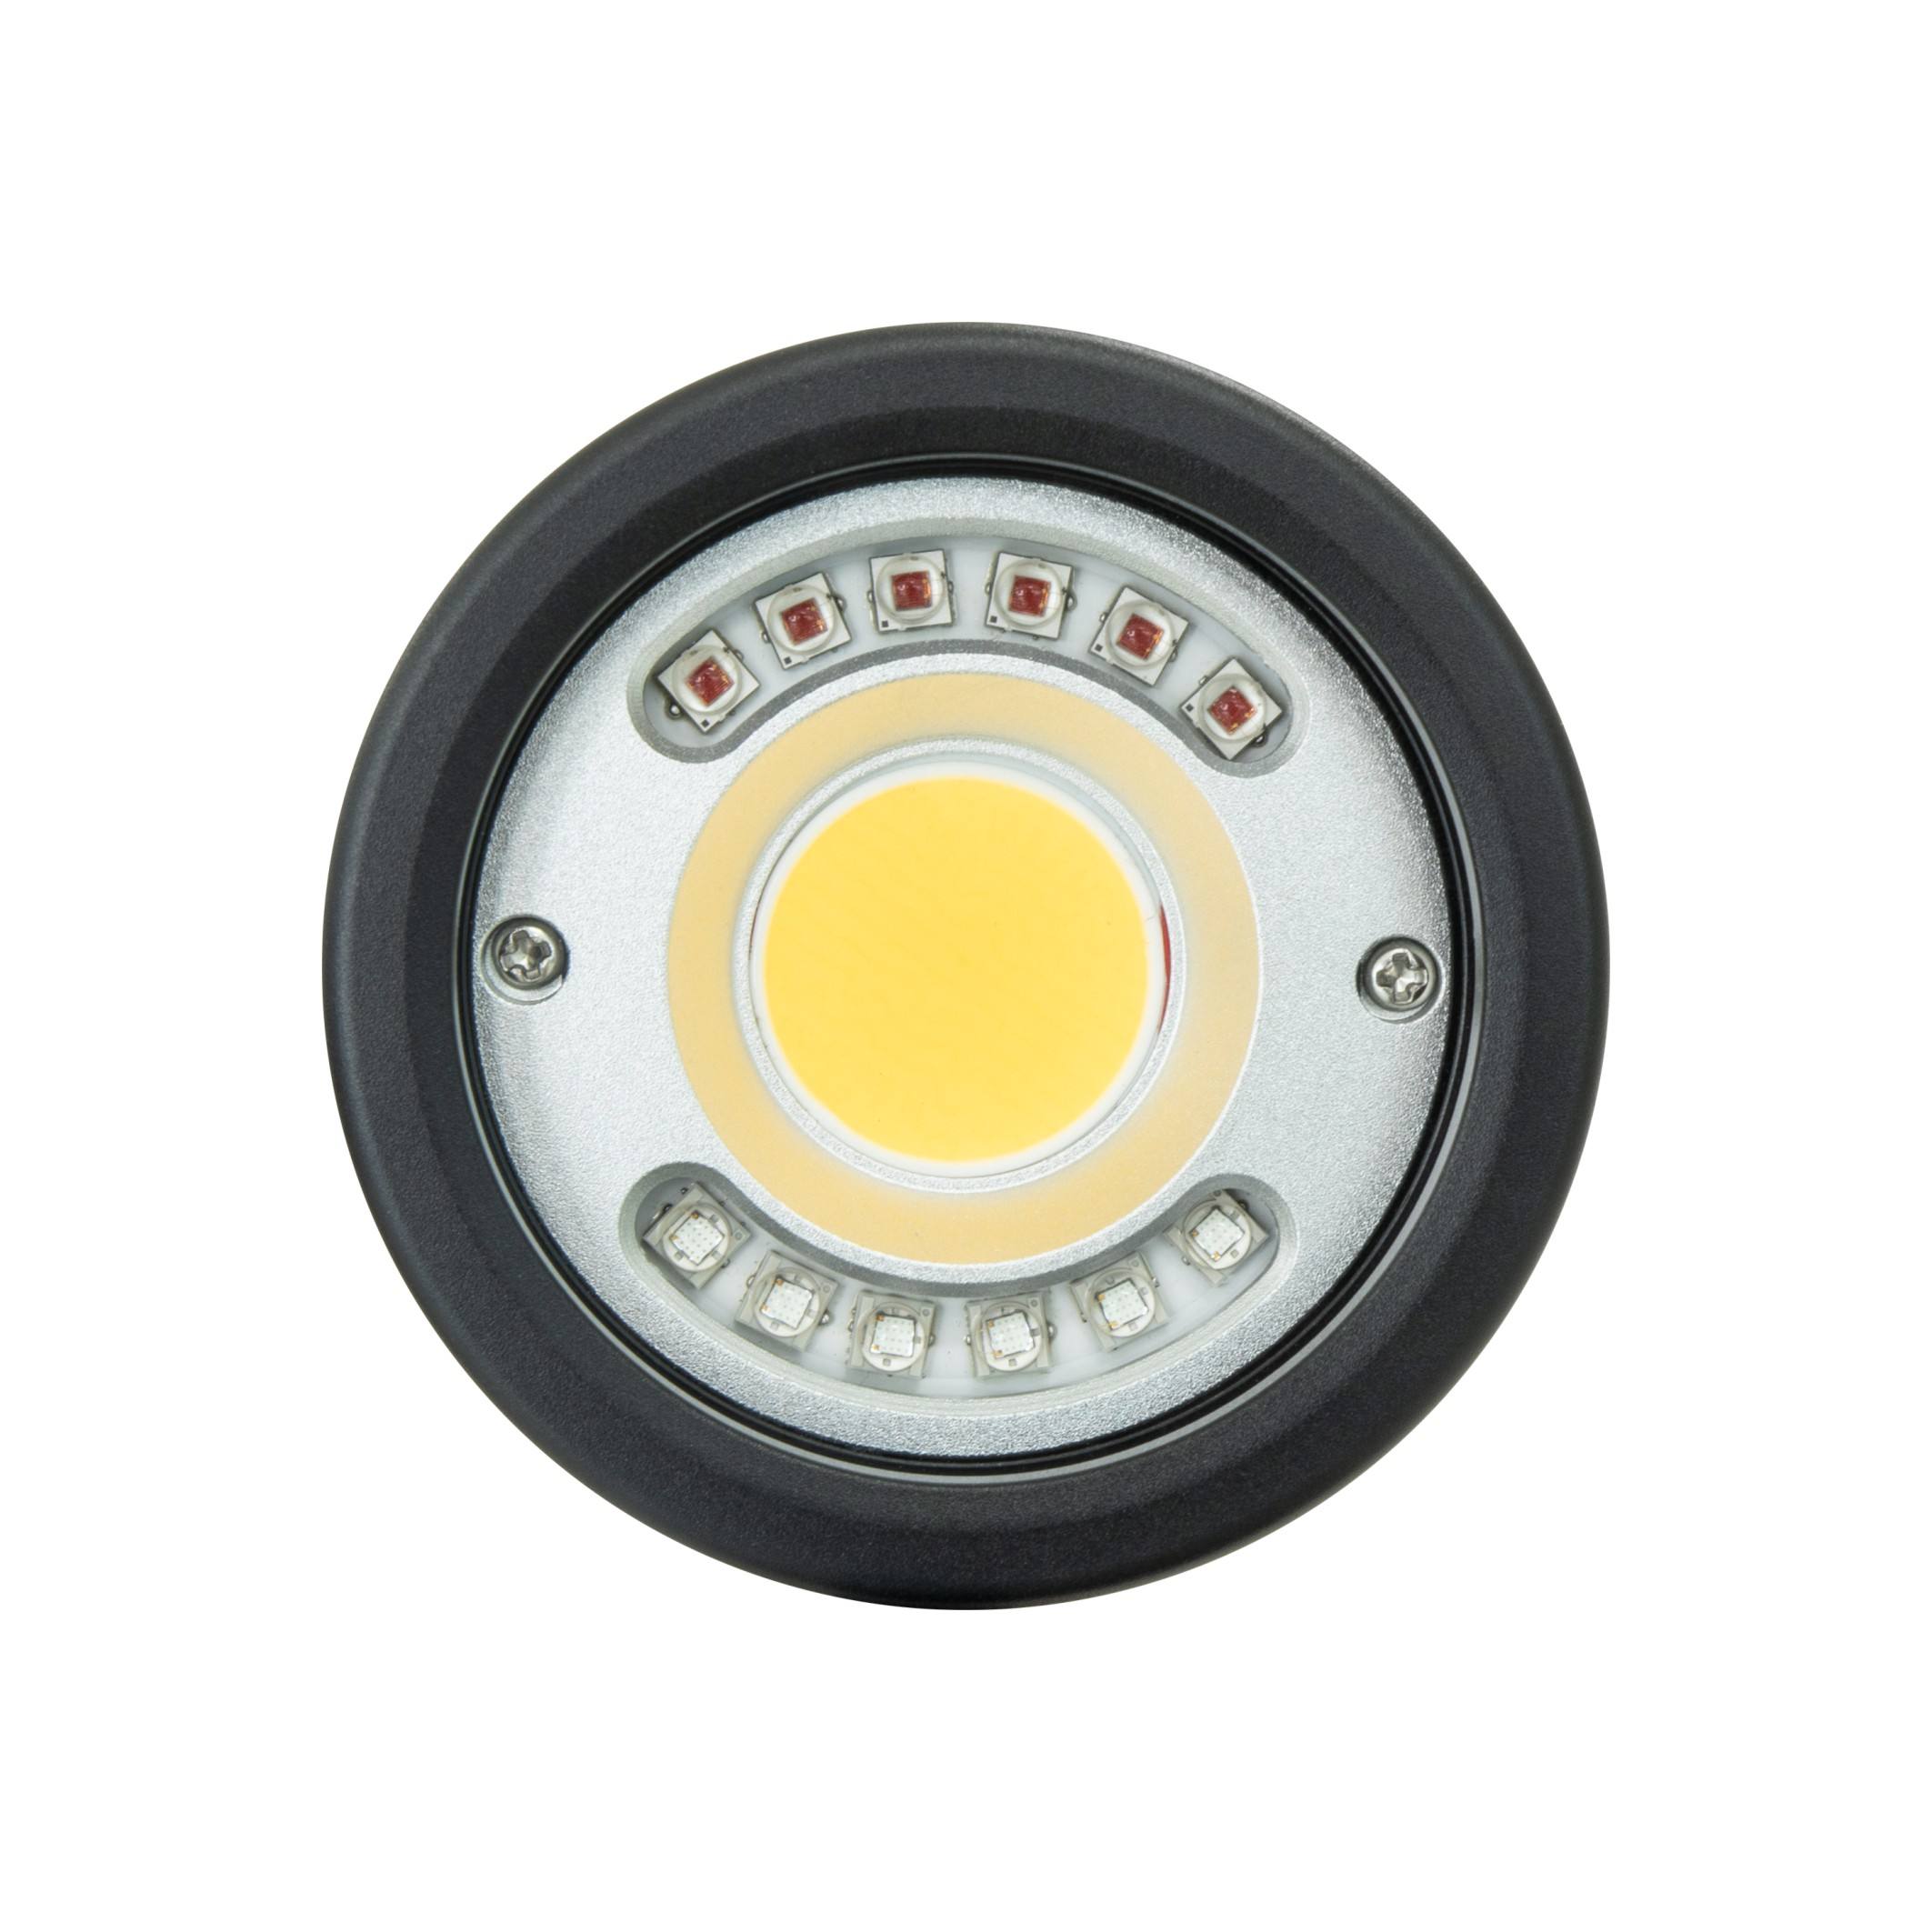 F4 Compact Focus Light